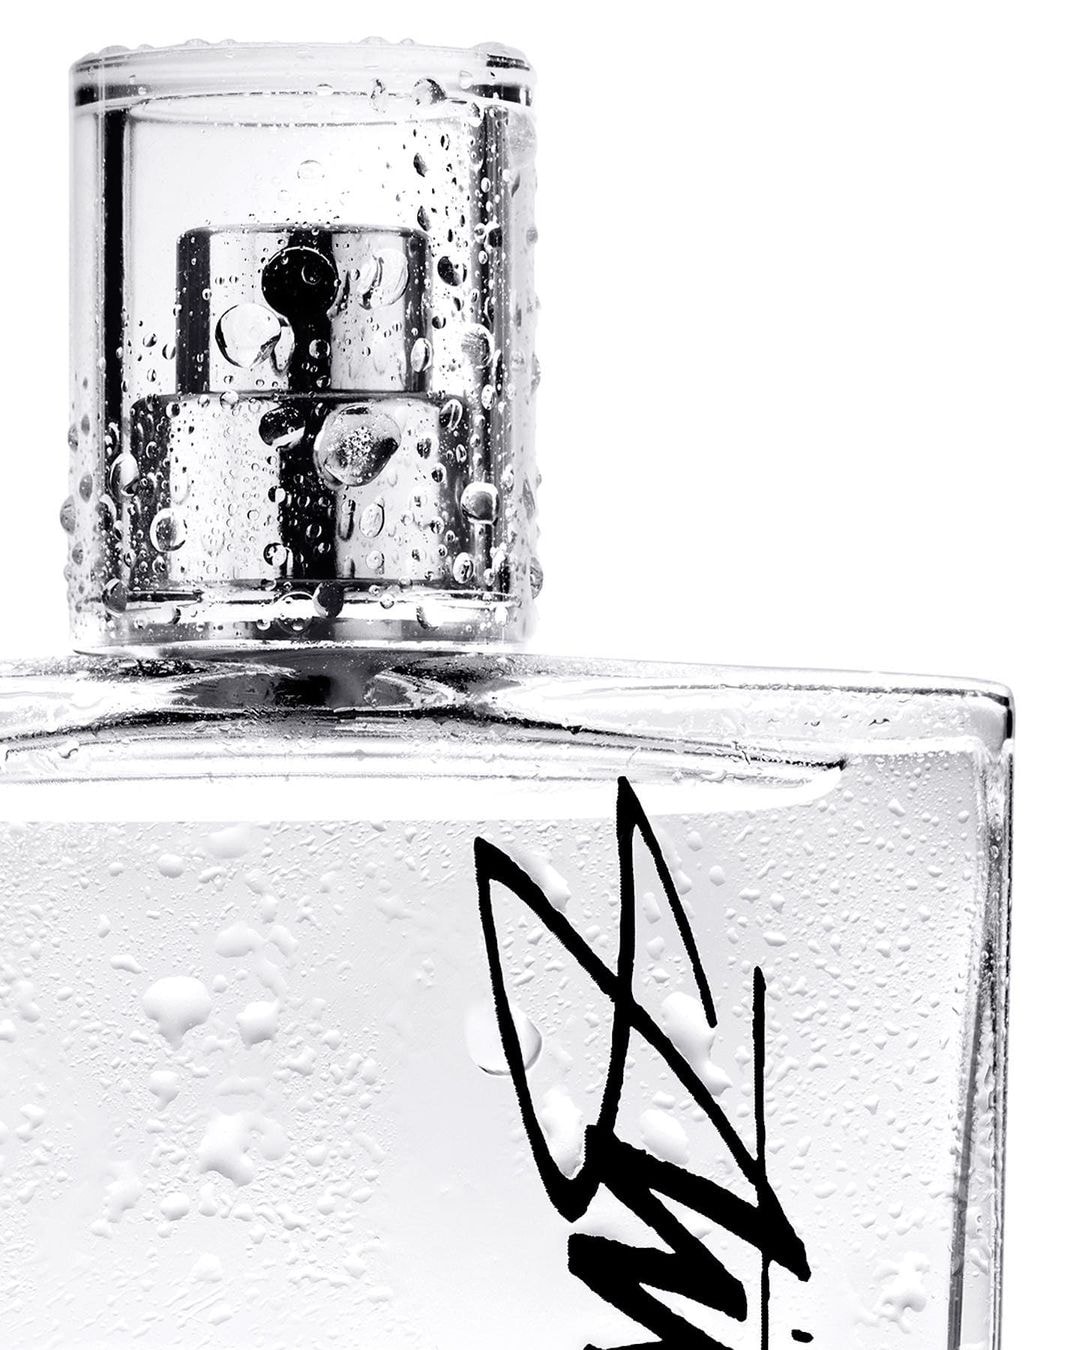 Stussy COMME des GARÇONS parfums Laguna Beach Fragrance Perfume Bottle Campaign Packaging